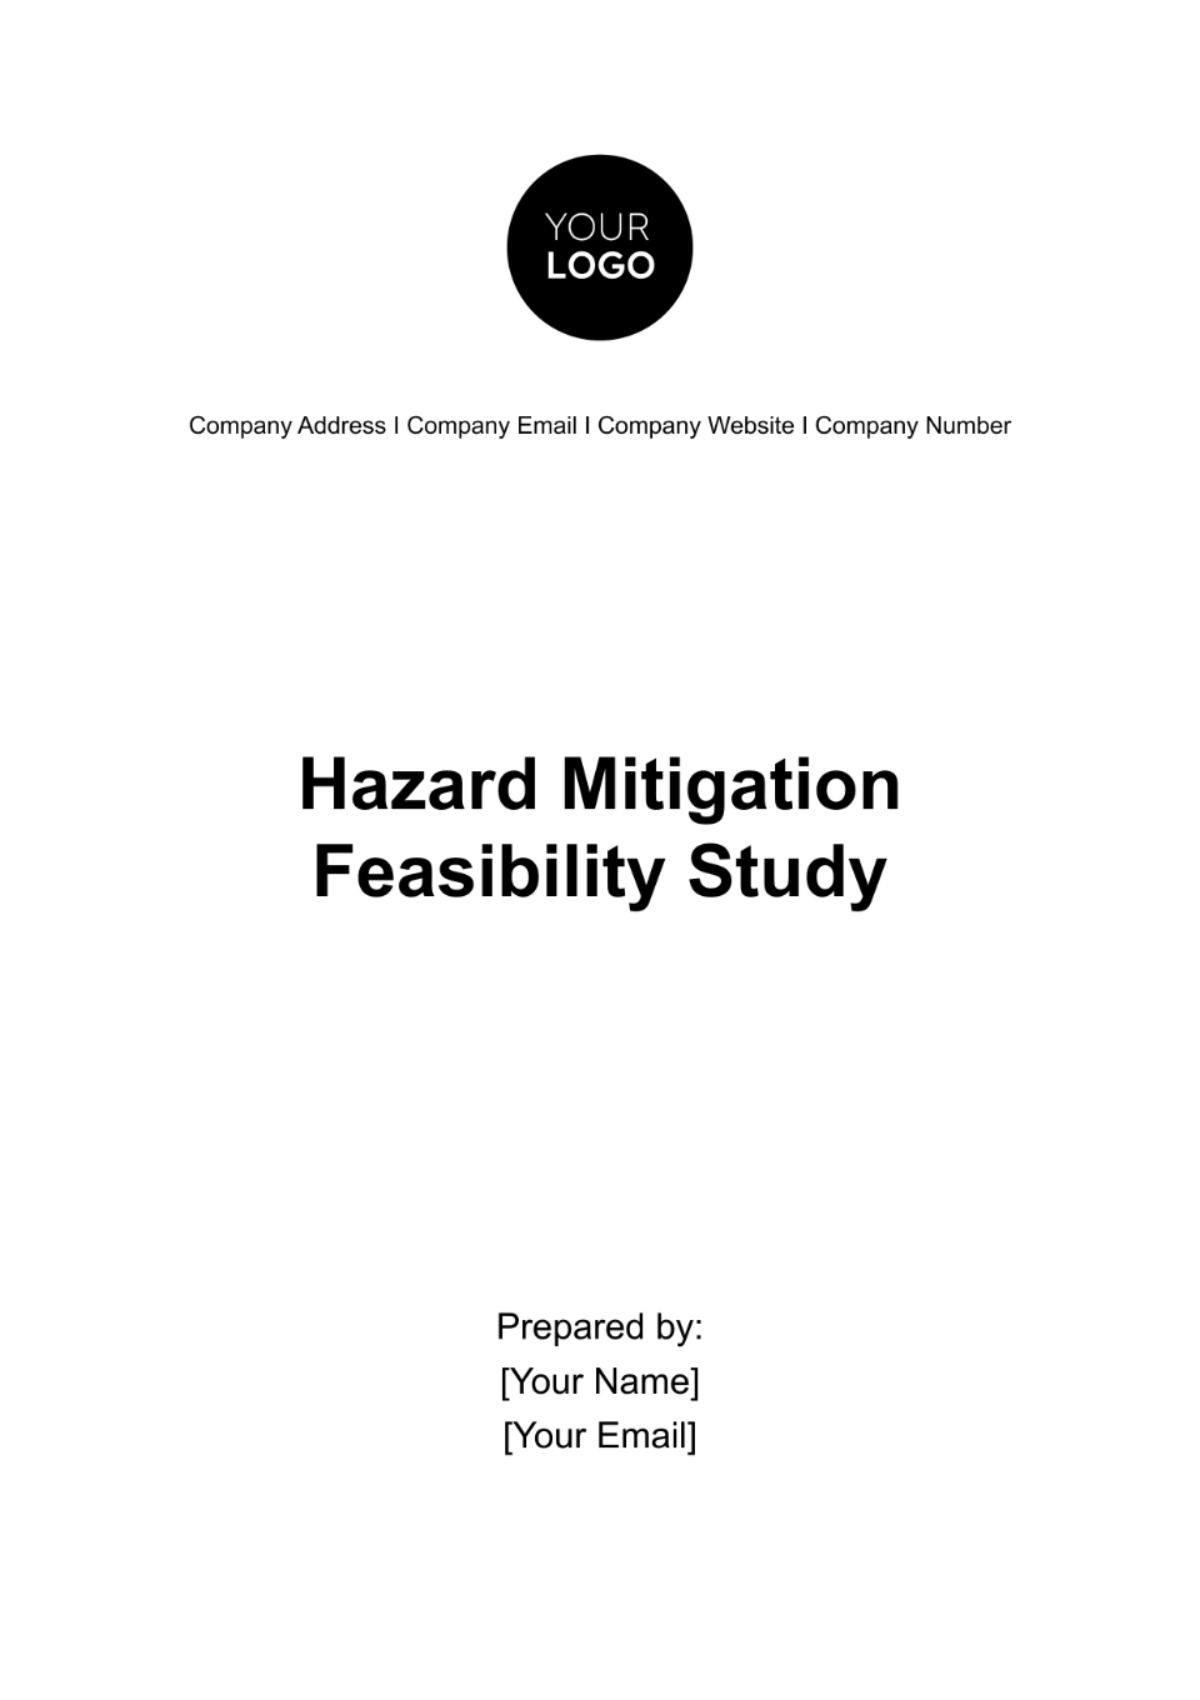 Hazard Mitigation Feasibility Study Template